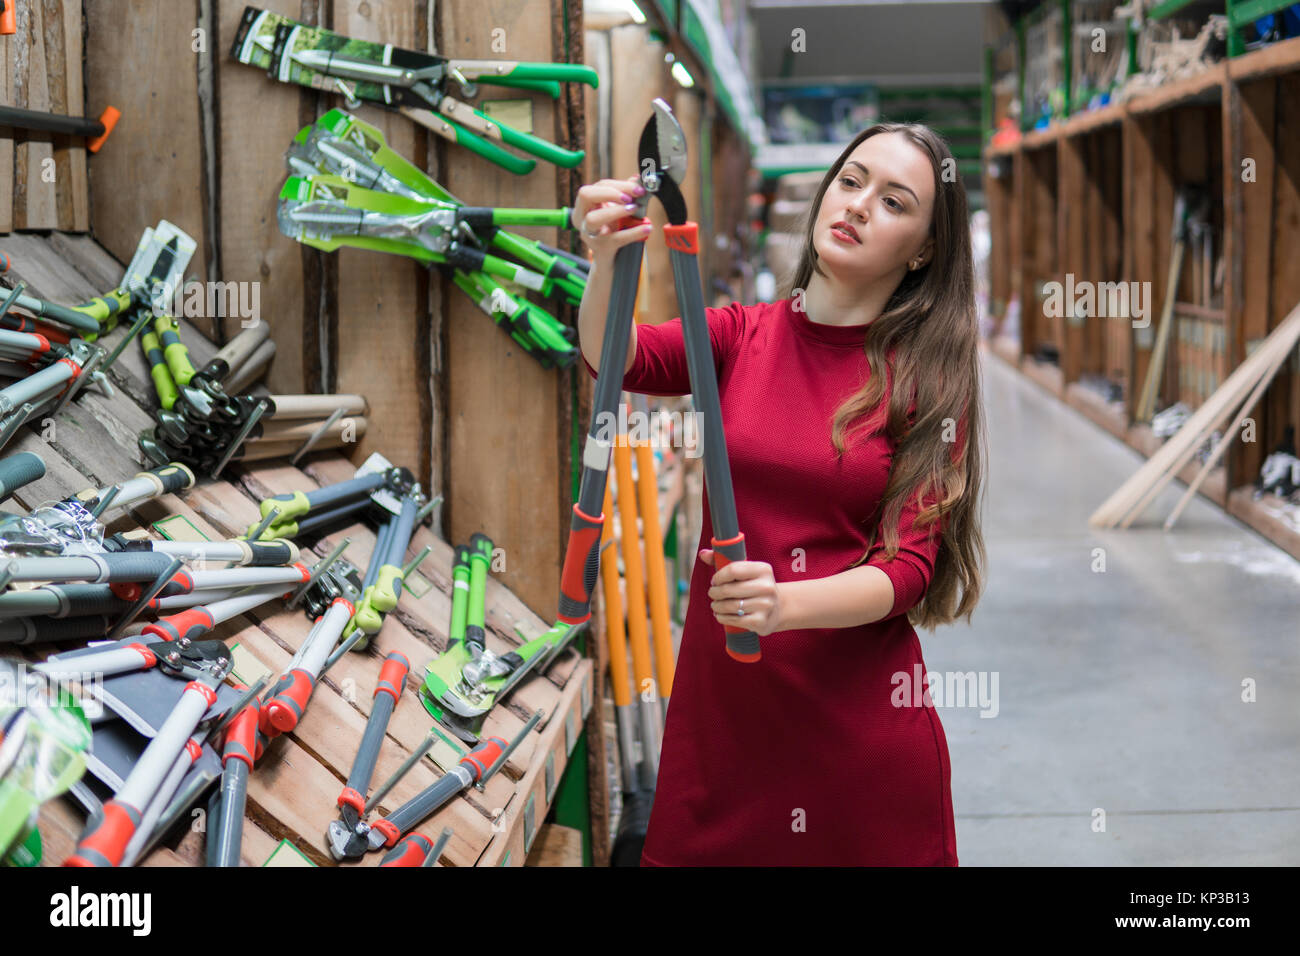 Customer woman buy garden maintenance tools. Stock Photo